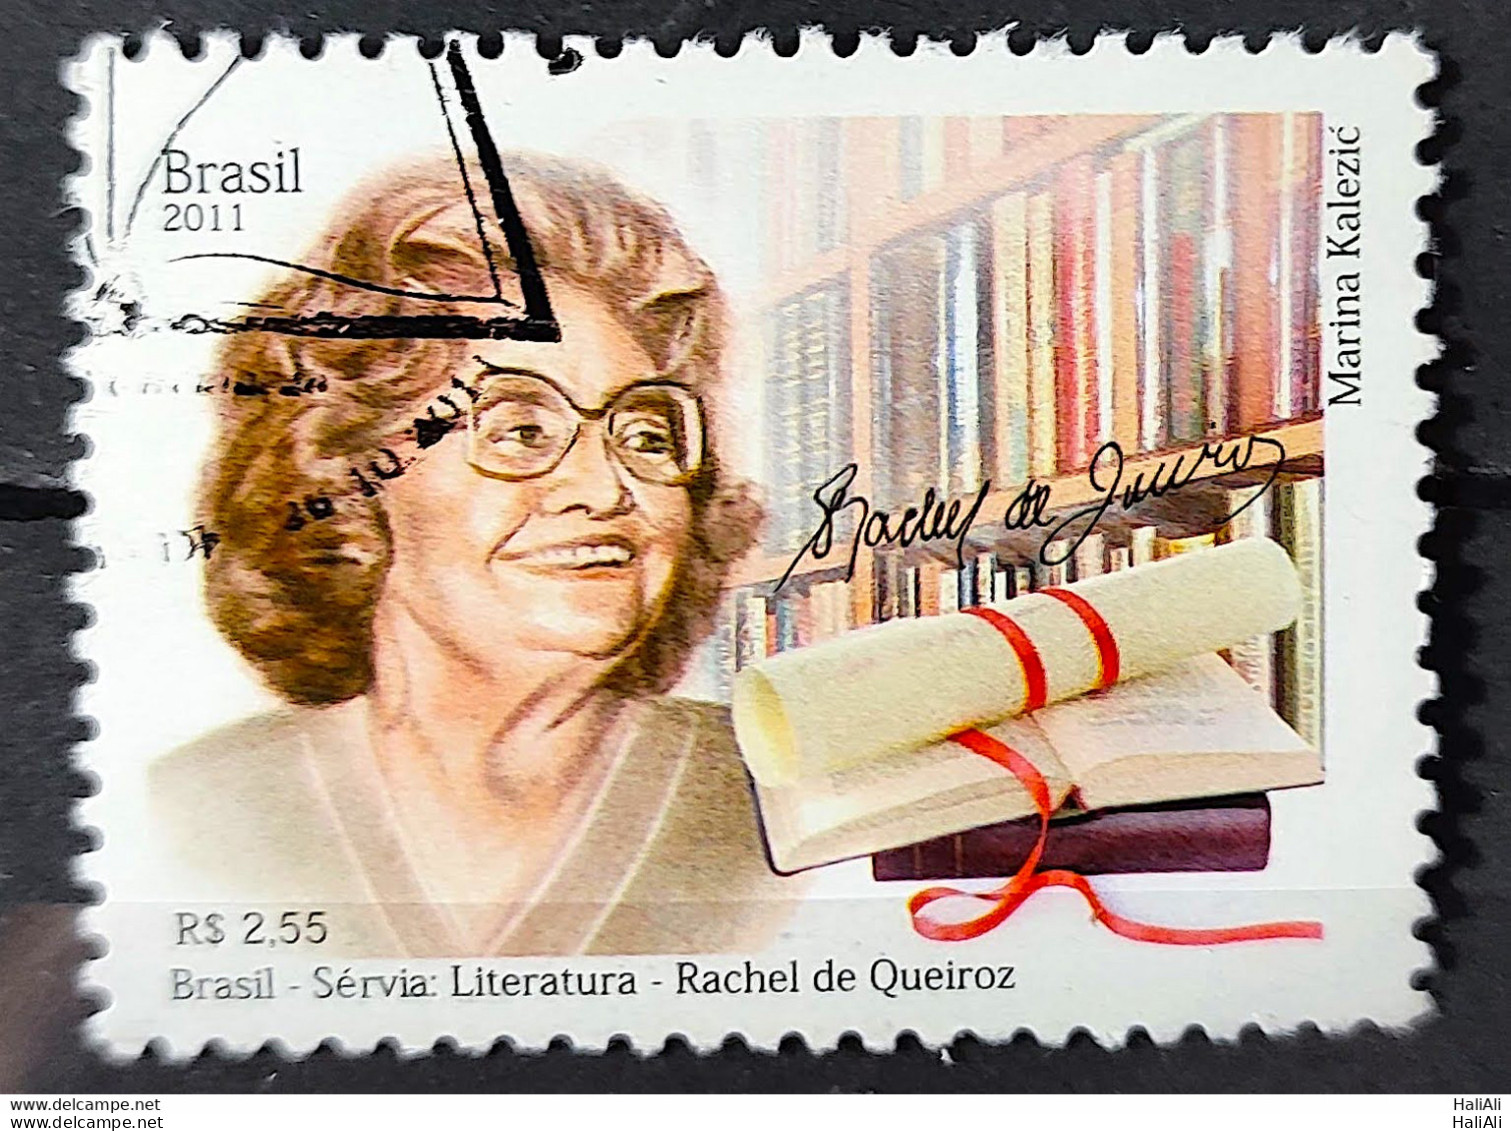 C 3149 Brazil Stamp Diplomatic Relations Servia Rachel De Queiroz Literature 2011 Circulated 1 - Gebruikt